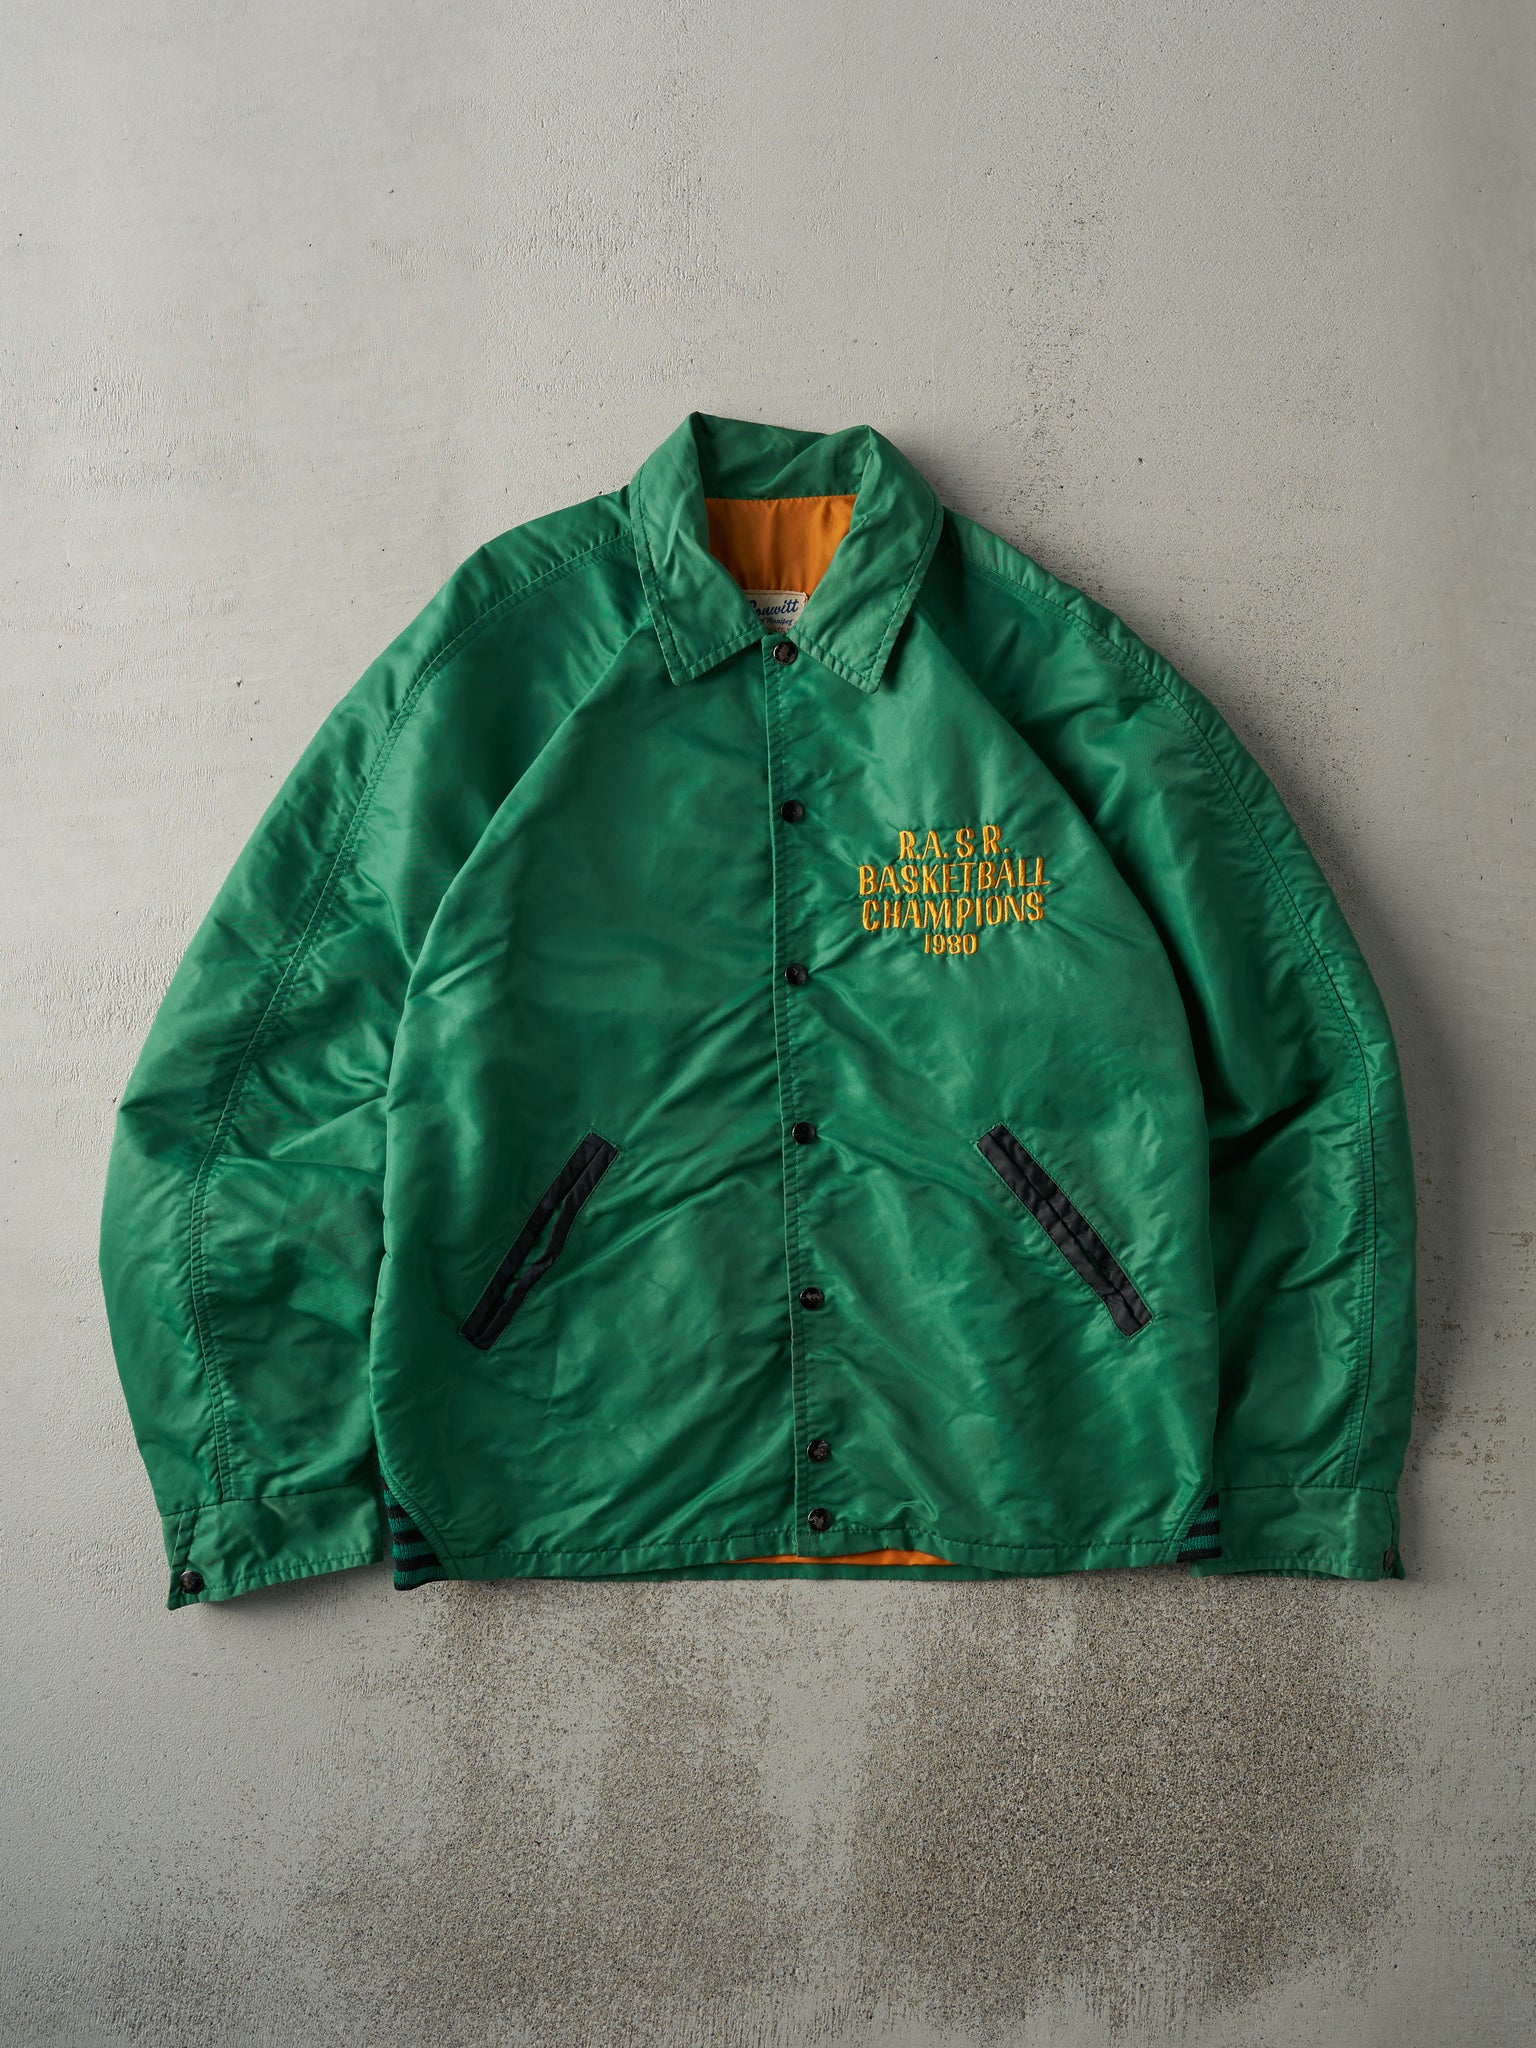 Vintage 80s Green R.A. SR Basketball Champions Nylon Puffer Jacket (M)